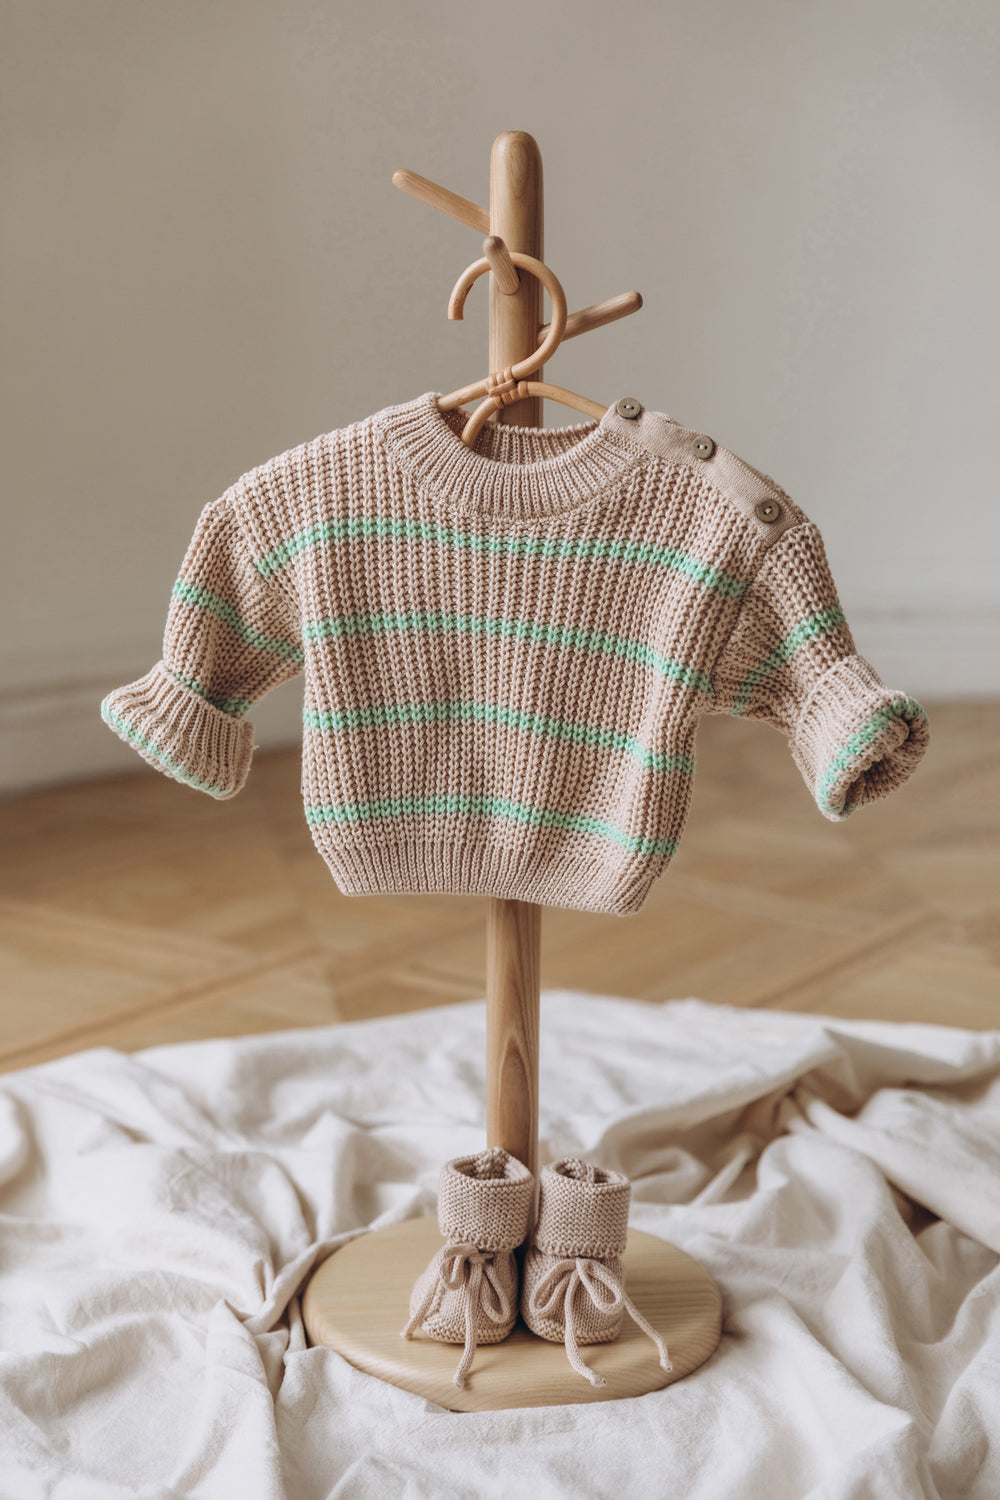 Knit newborn outfit -  chunky oversized sweater, newborn coming home outfit -baby knit sweater 0-3 months, newborn outfit bringing home,  my first outfit